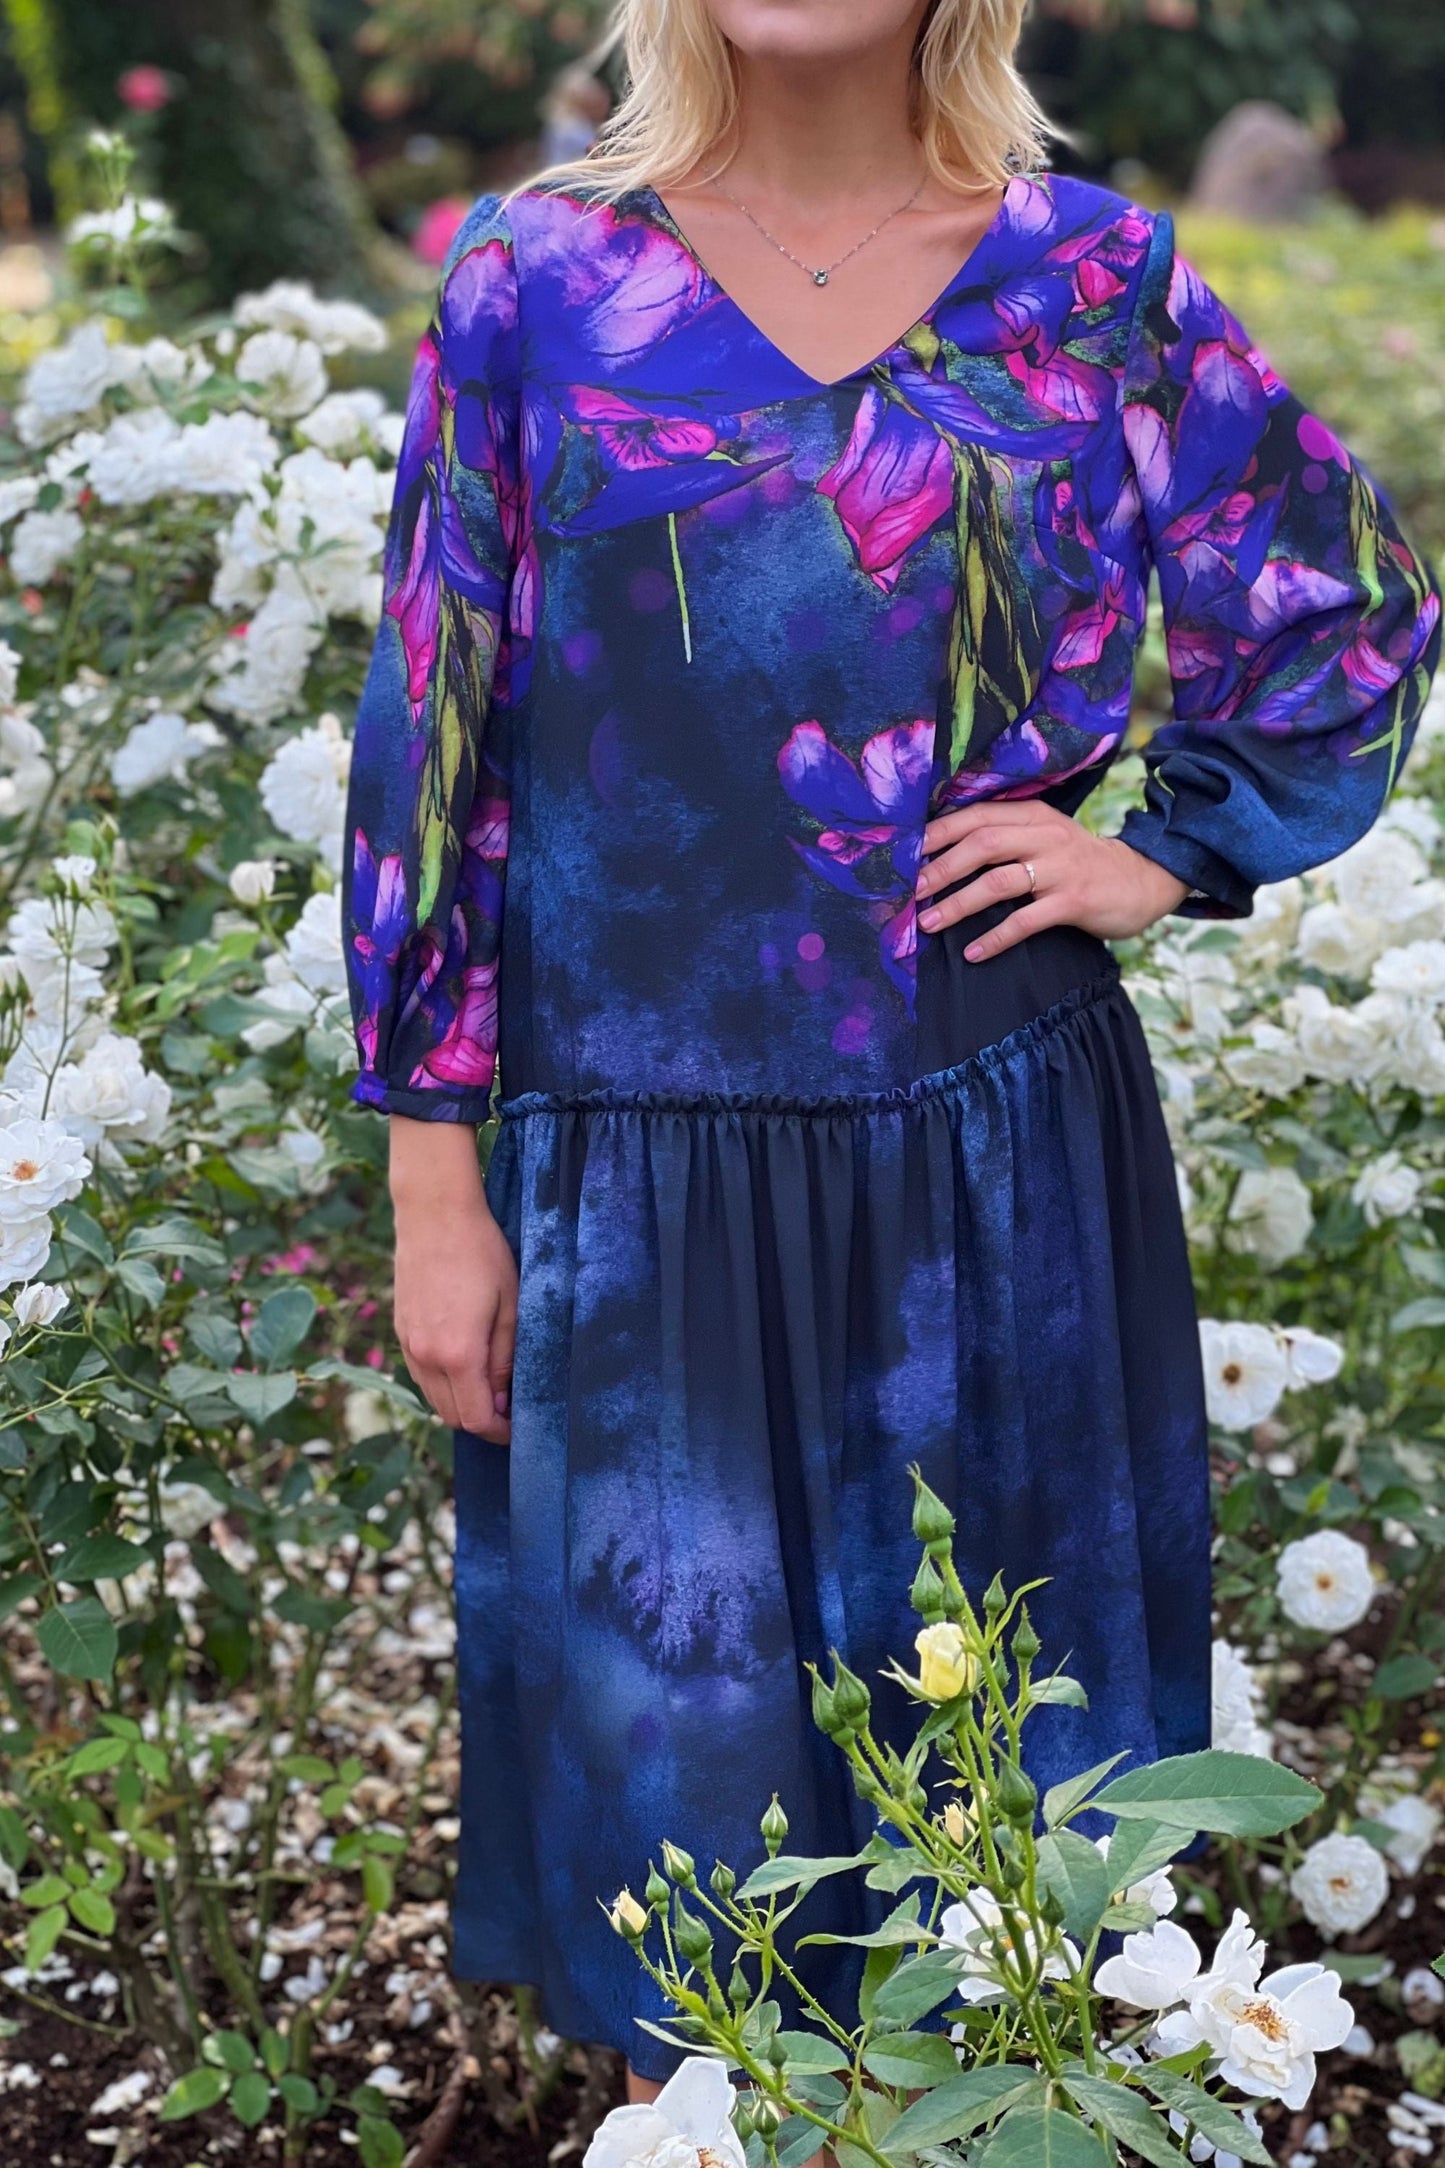 Chiffon dress in gray-purple tones with painted irises